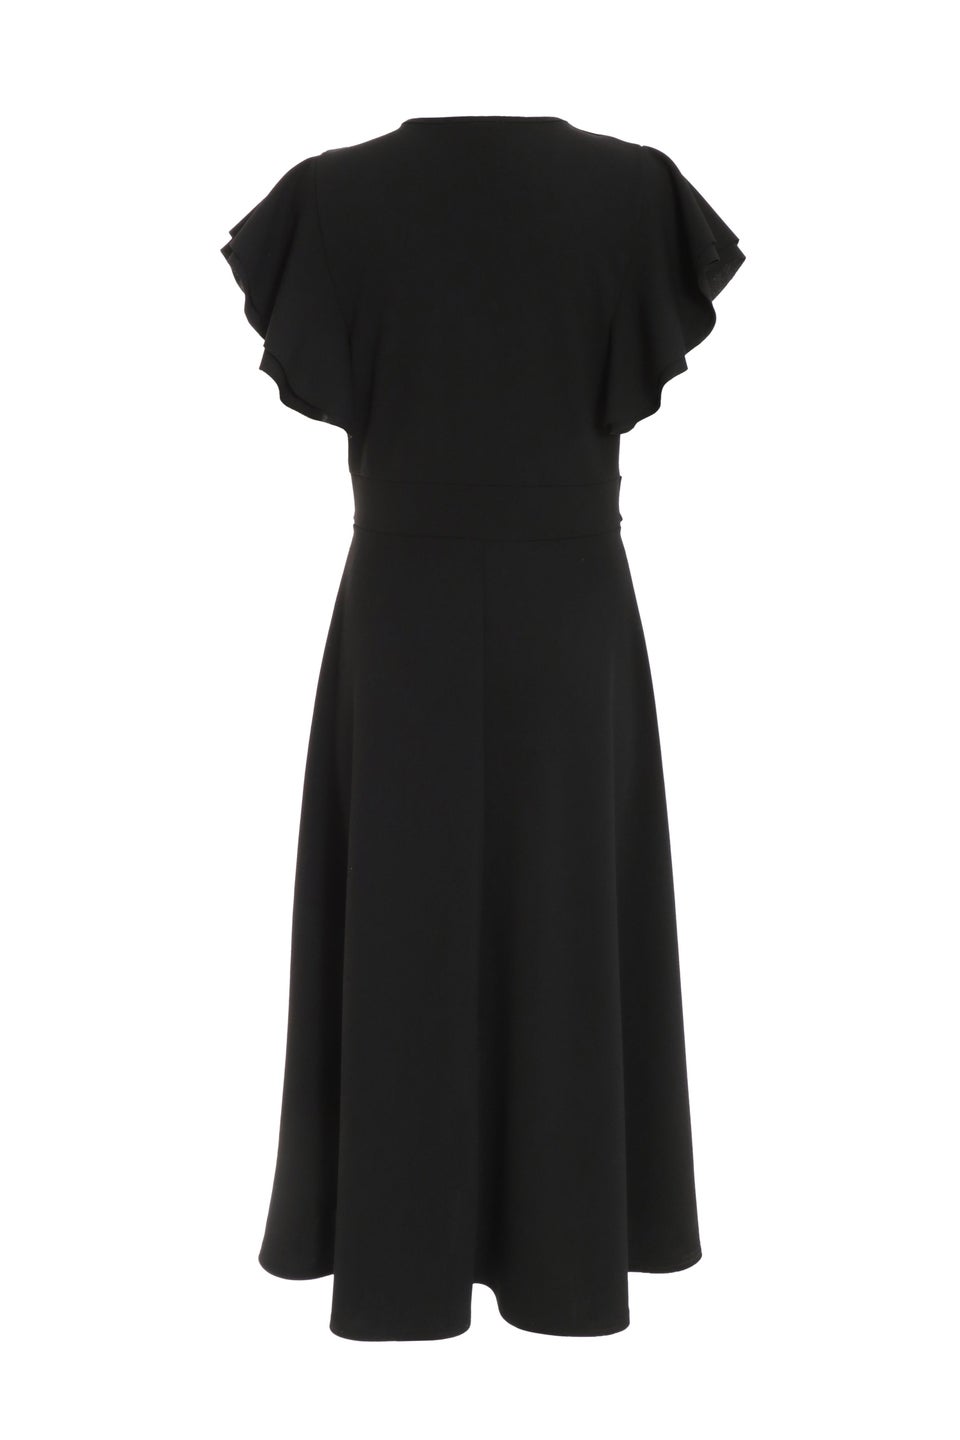 Quiz Black Wrap Dip Hem Midi Dress - Matalan